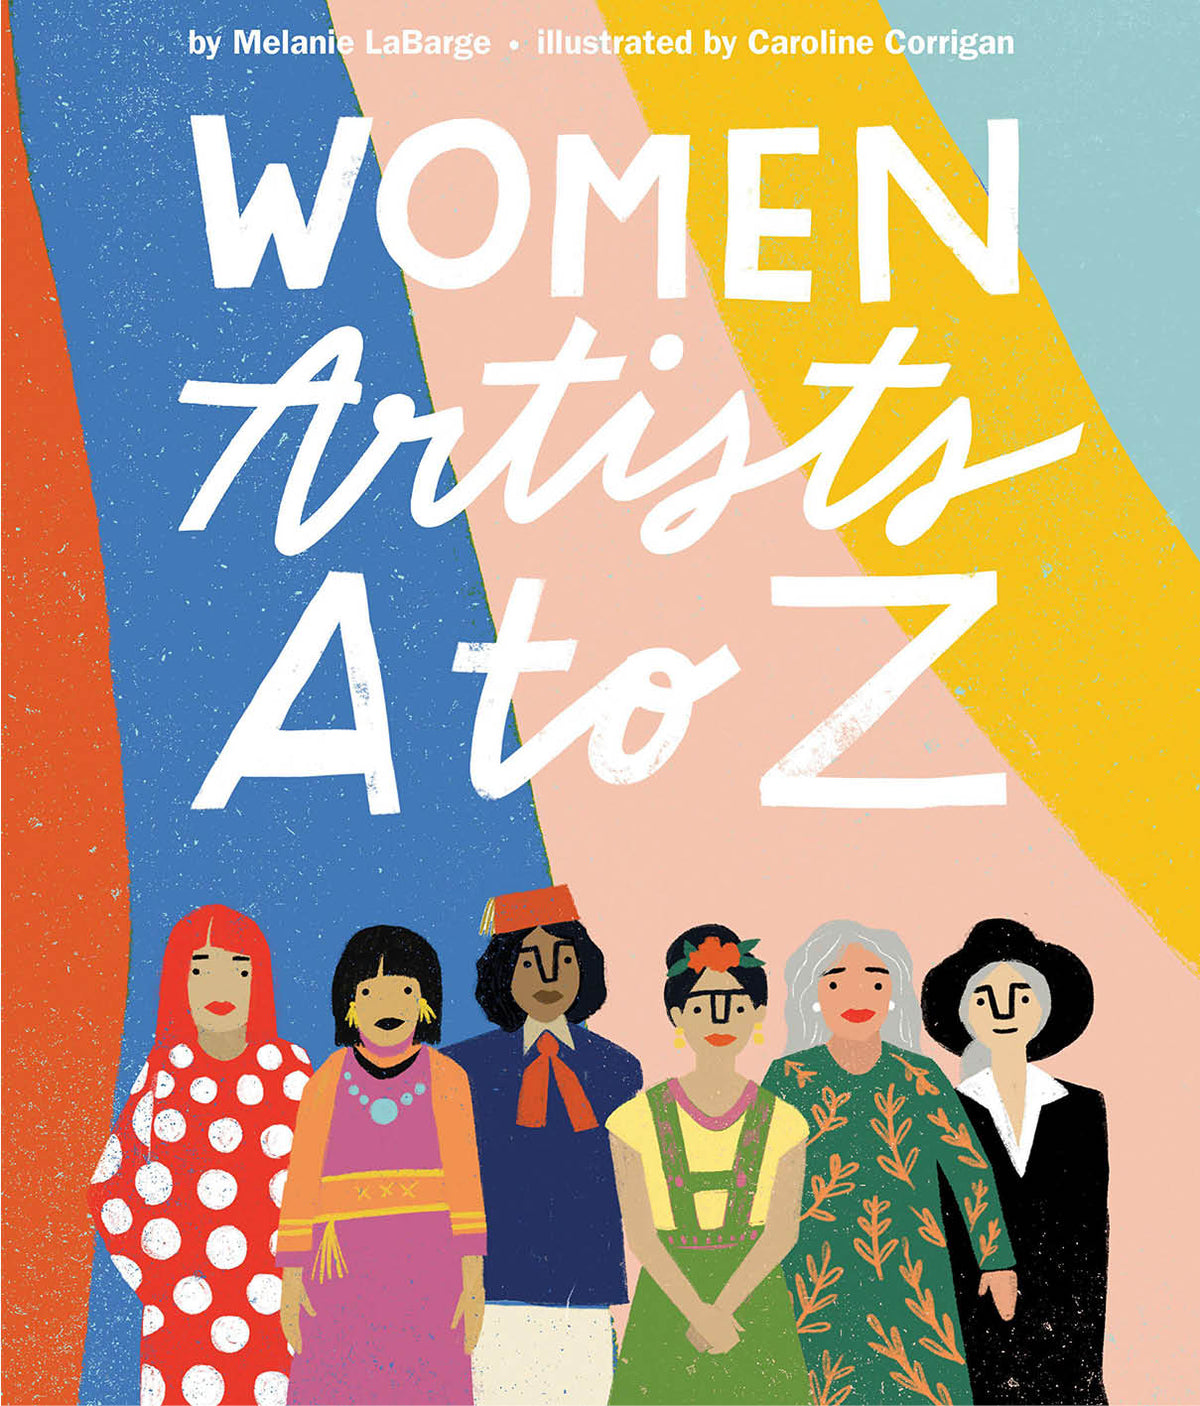 Women Artists A to Z by Melanie LaBarge